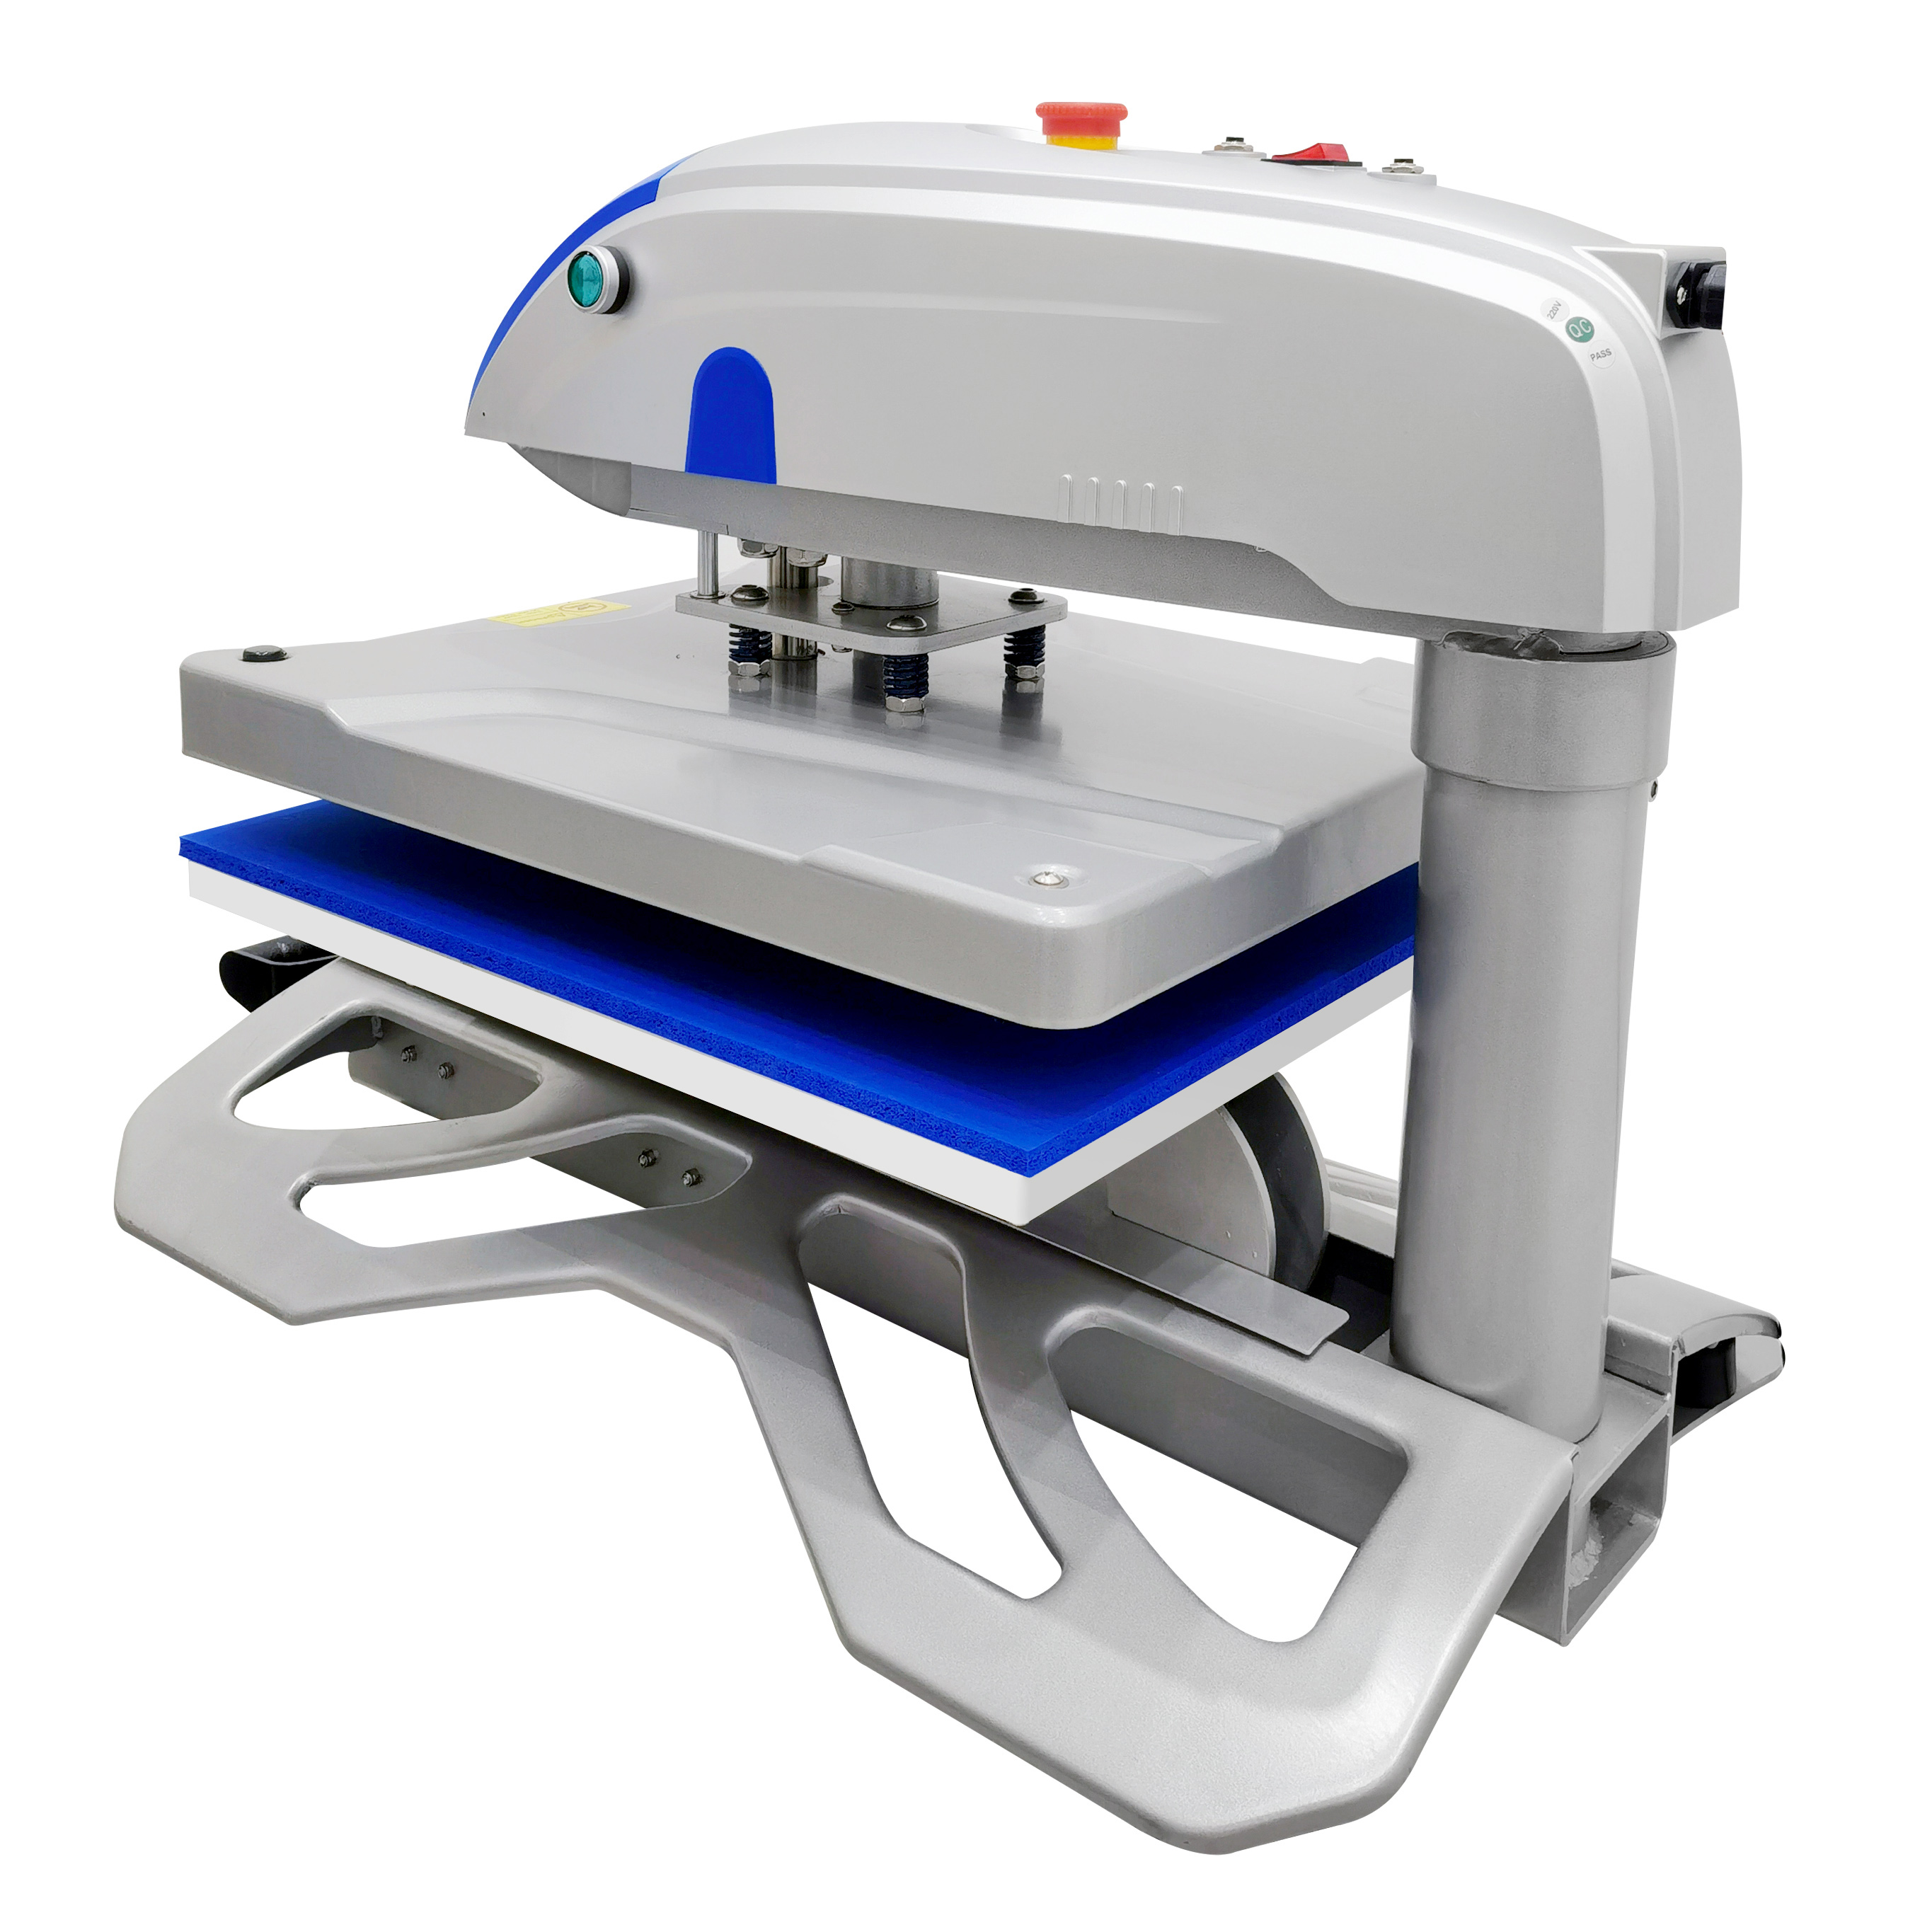 SUPER DEAL PRO 12 X 10 Heat Press Machine Digital Swing Away Heat  Transfer Printing Sublimation Machine with 2 Teflon Sheet for T-Shirts,  Bags